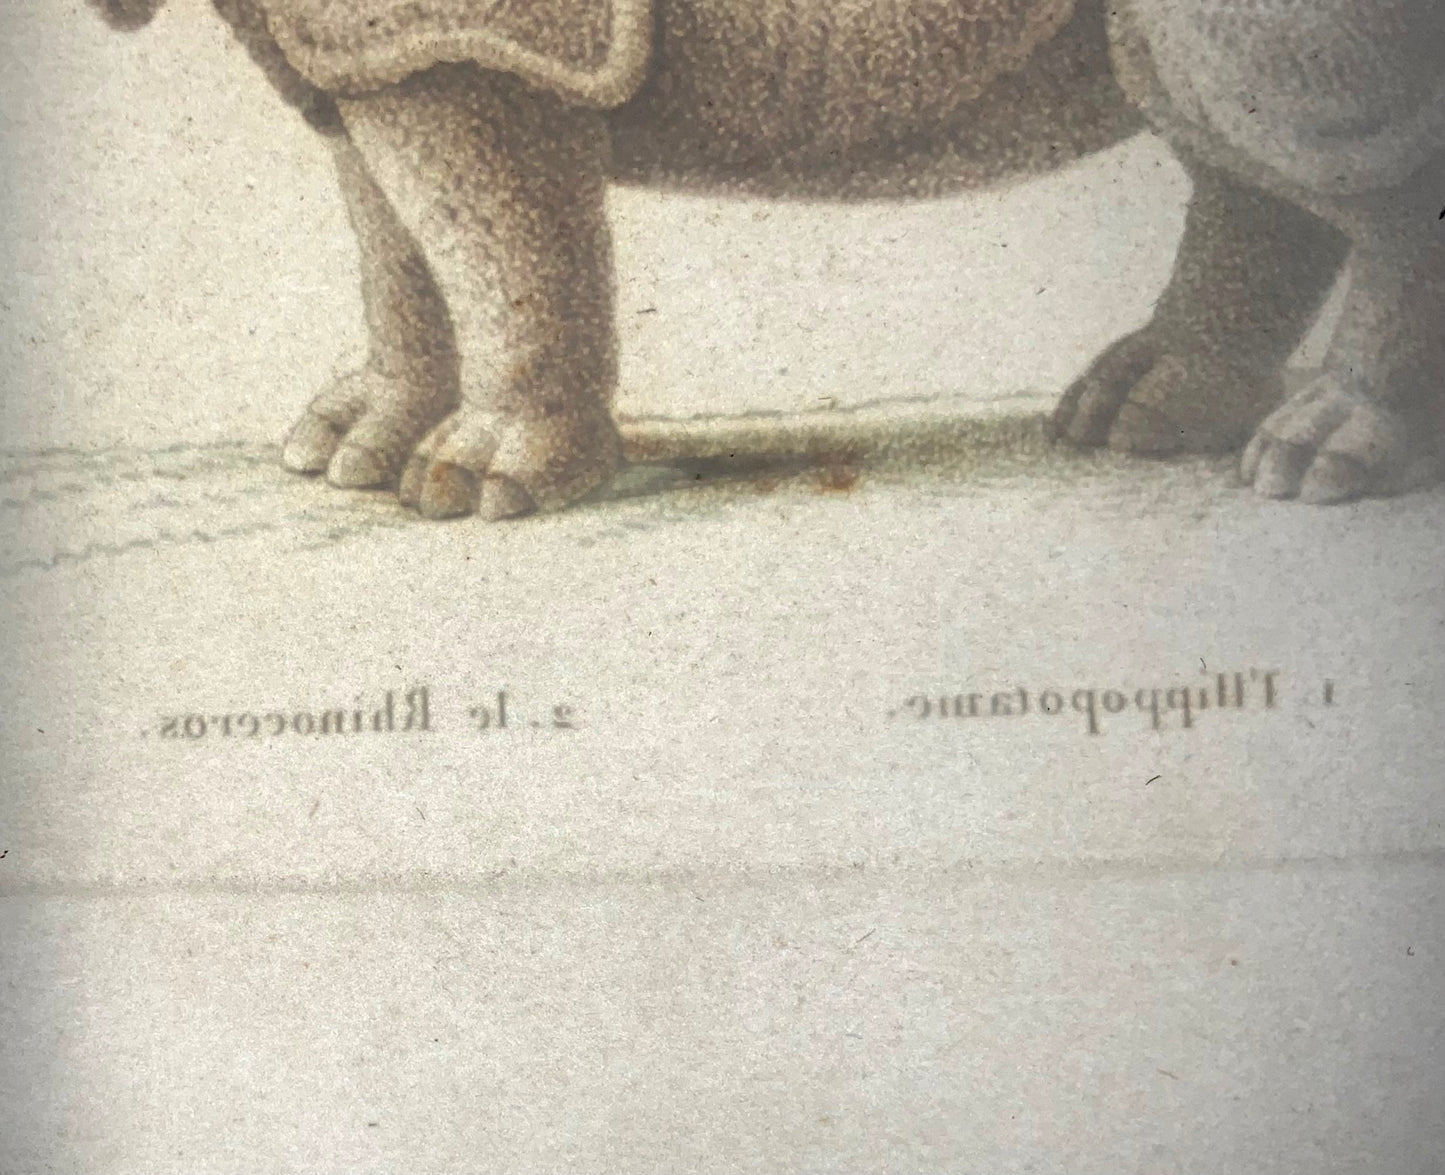 1808 Rinoceronte, Ippopotamo, JB Huet [b1745]; incisione a mano con imbianchino, mammiferi